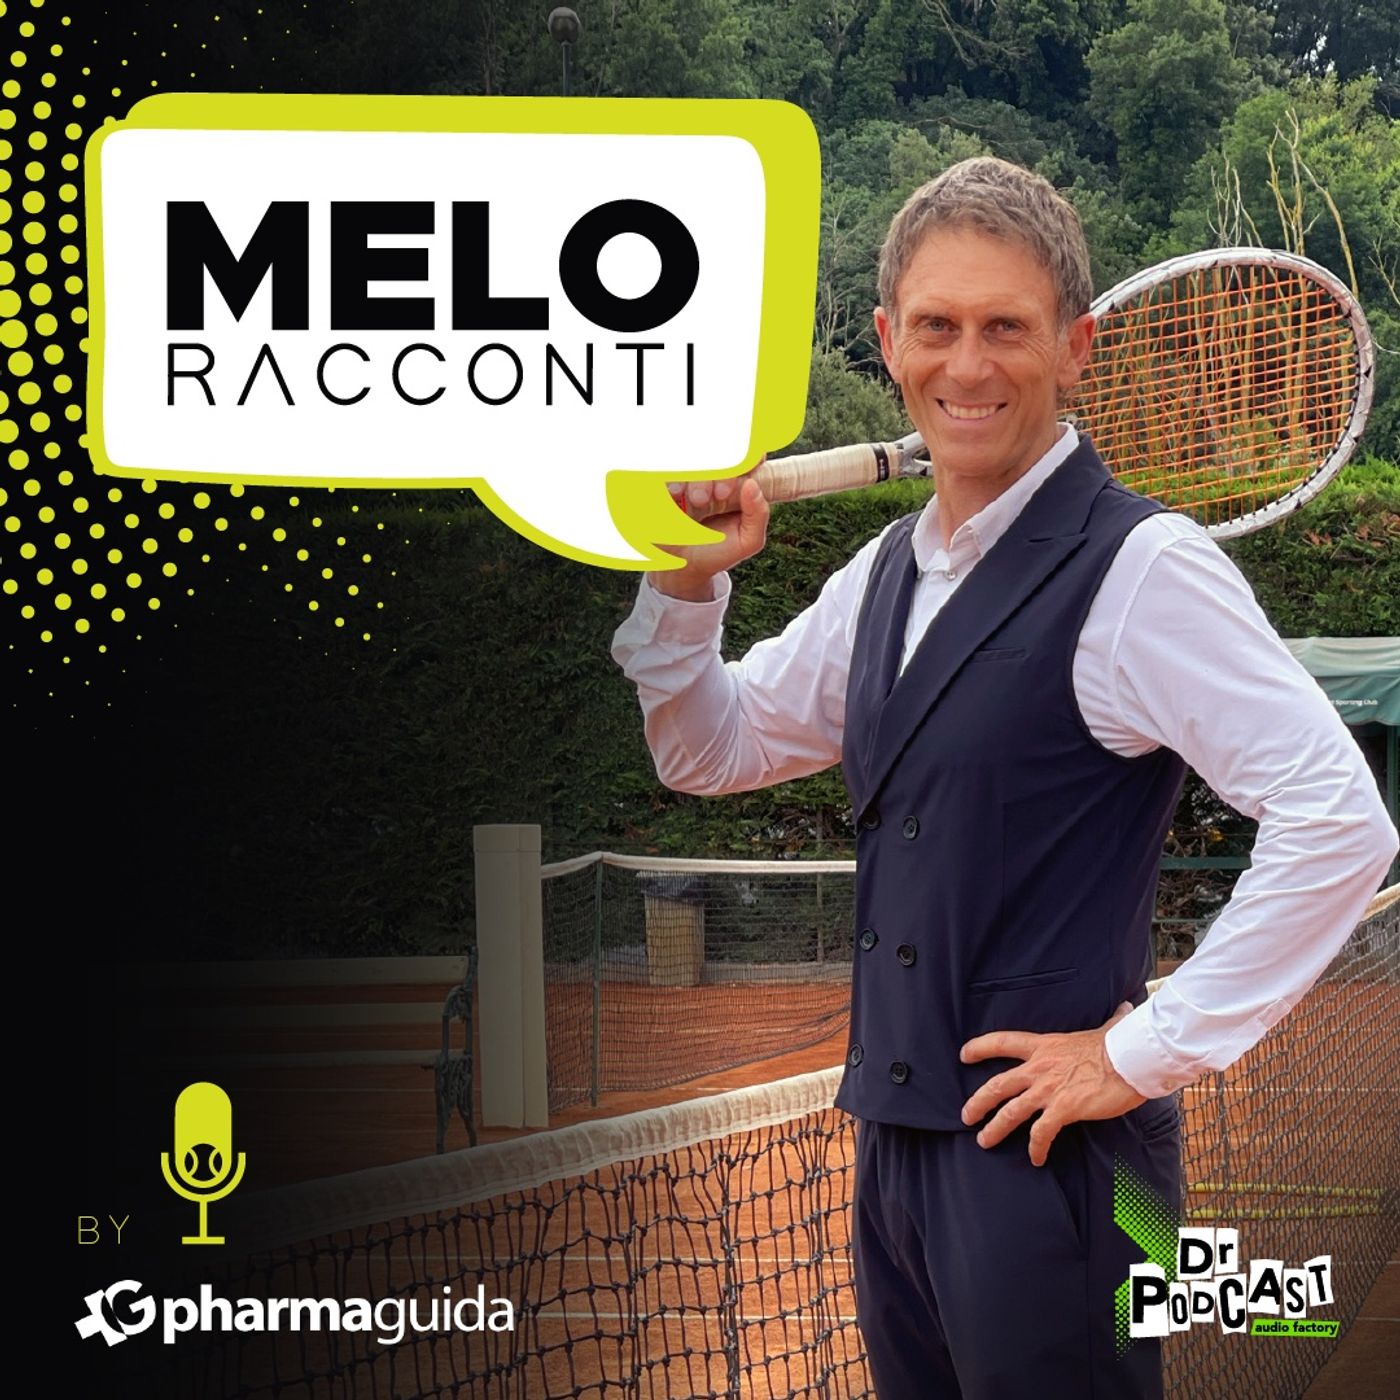 Dr Podcast - Melo Racconti – Tennis e non solo tennis